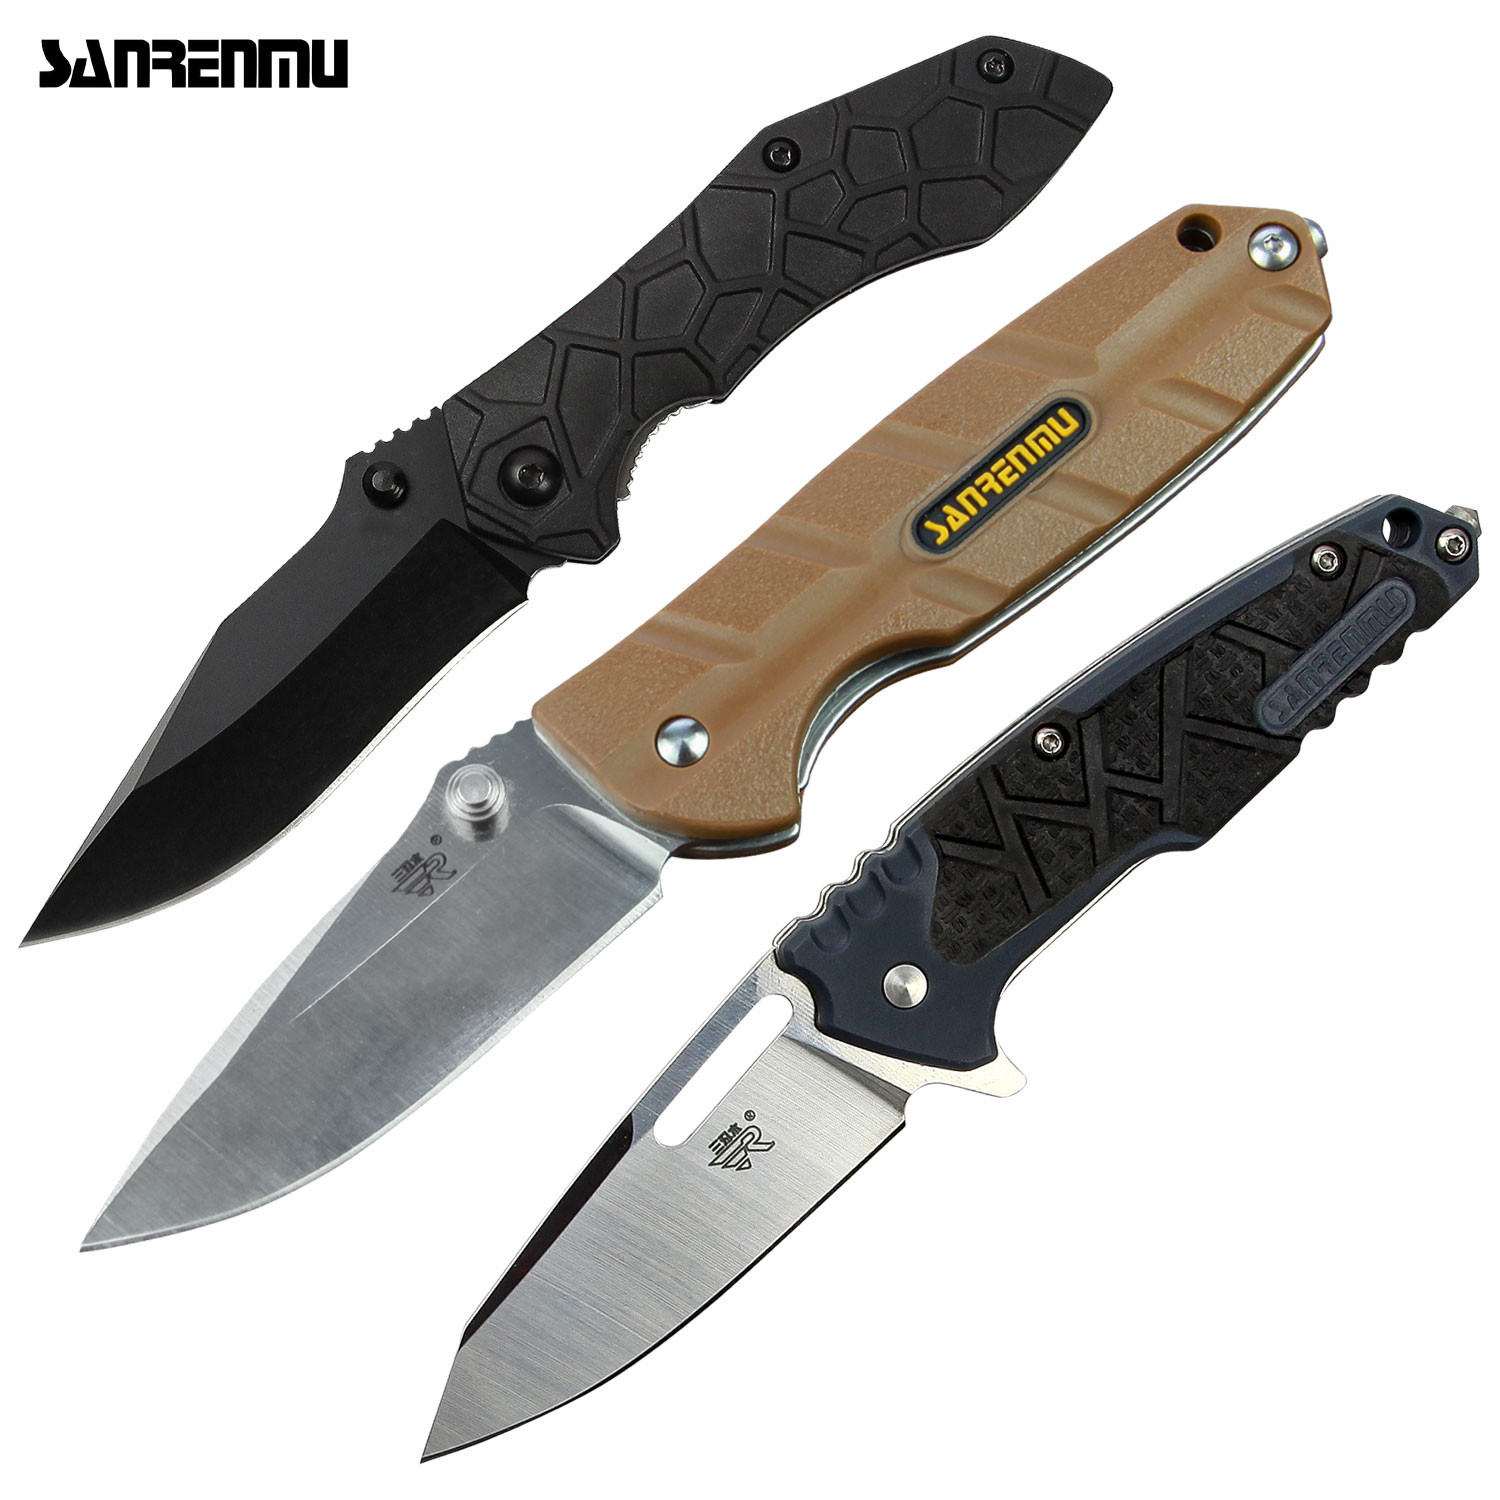 3-PACK: Sanrenmu Folding Pocket Knives - Vol. 6 $22 + Free Shipping